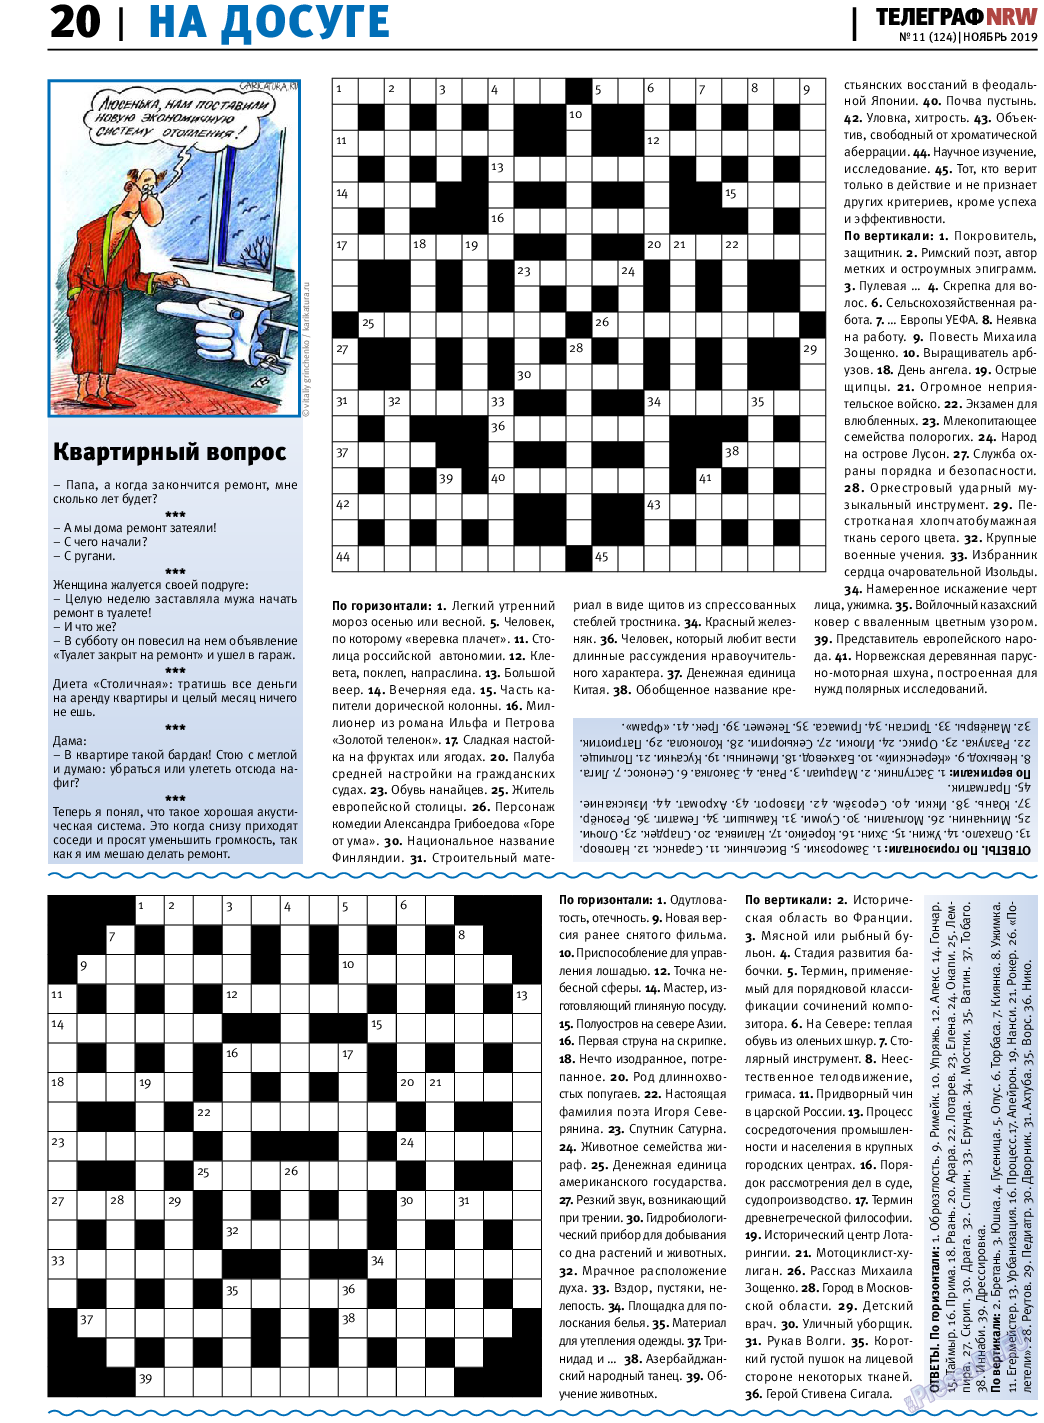 Телеграф NRW, газета. 2019 №11 стр.20